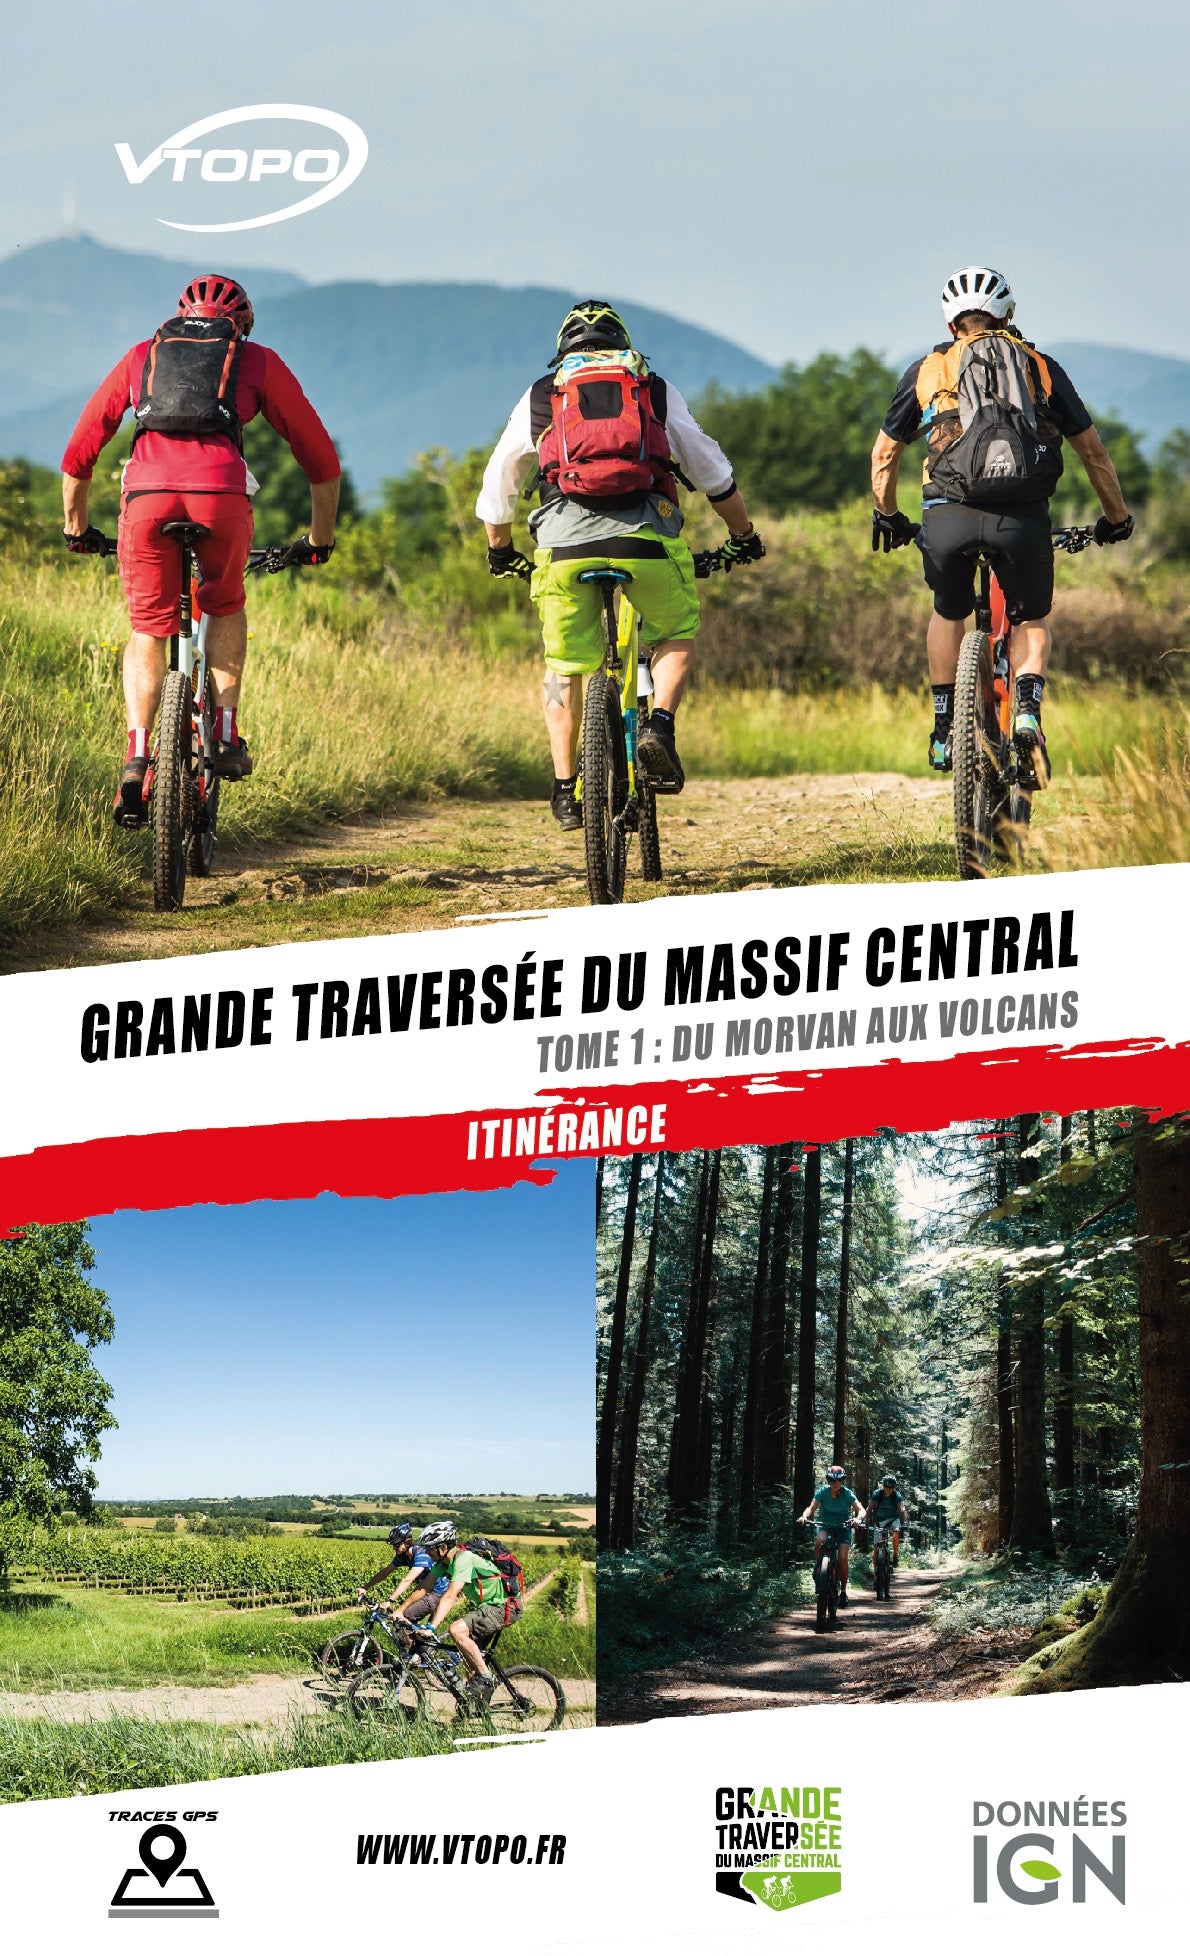 VTOPO VTT Itinérance Grande Traversée du Massif Central - Tome 1 - 2e édition